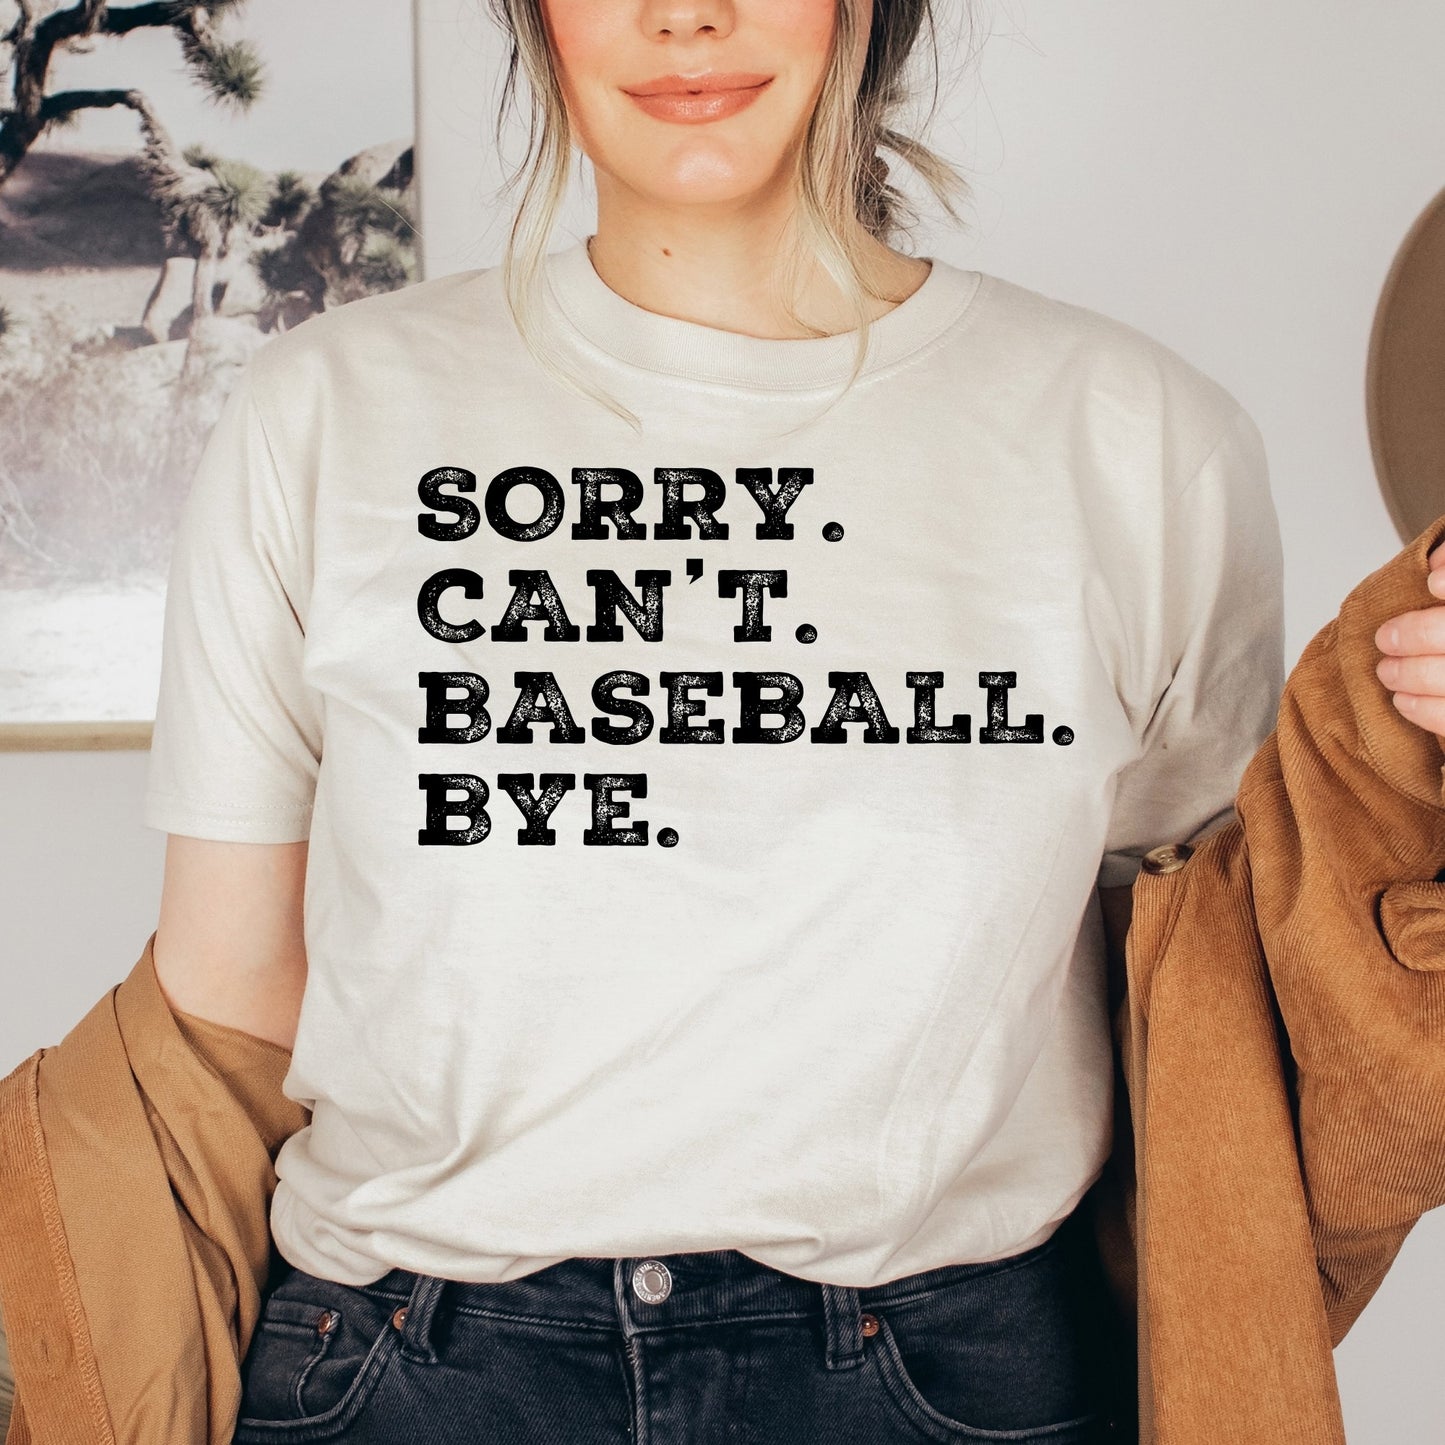 Sorry. Can't. Baseball. Bye. Shirt